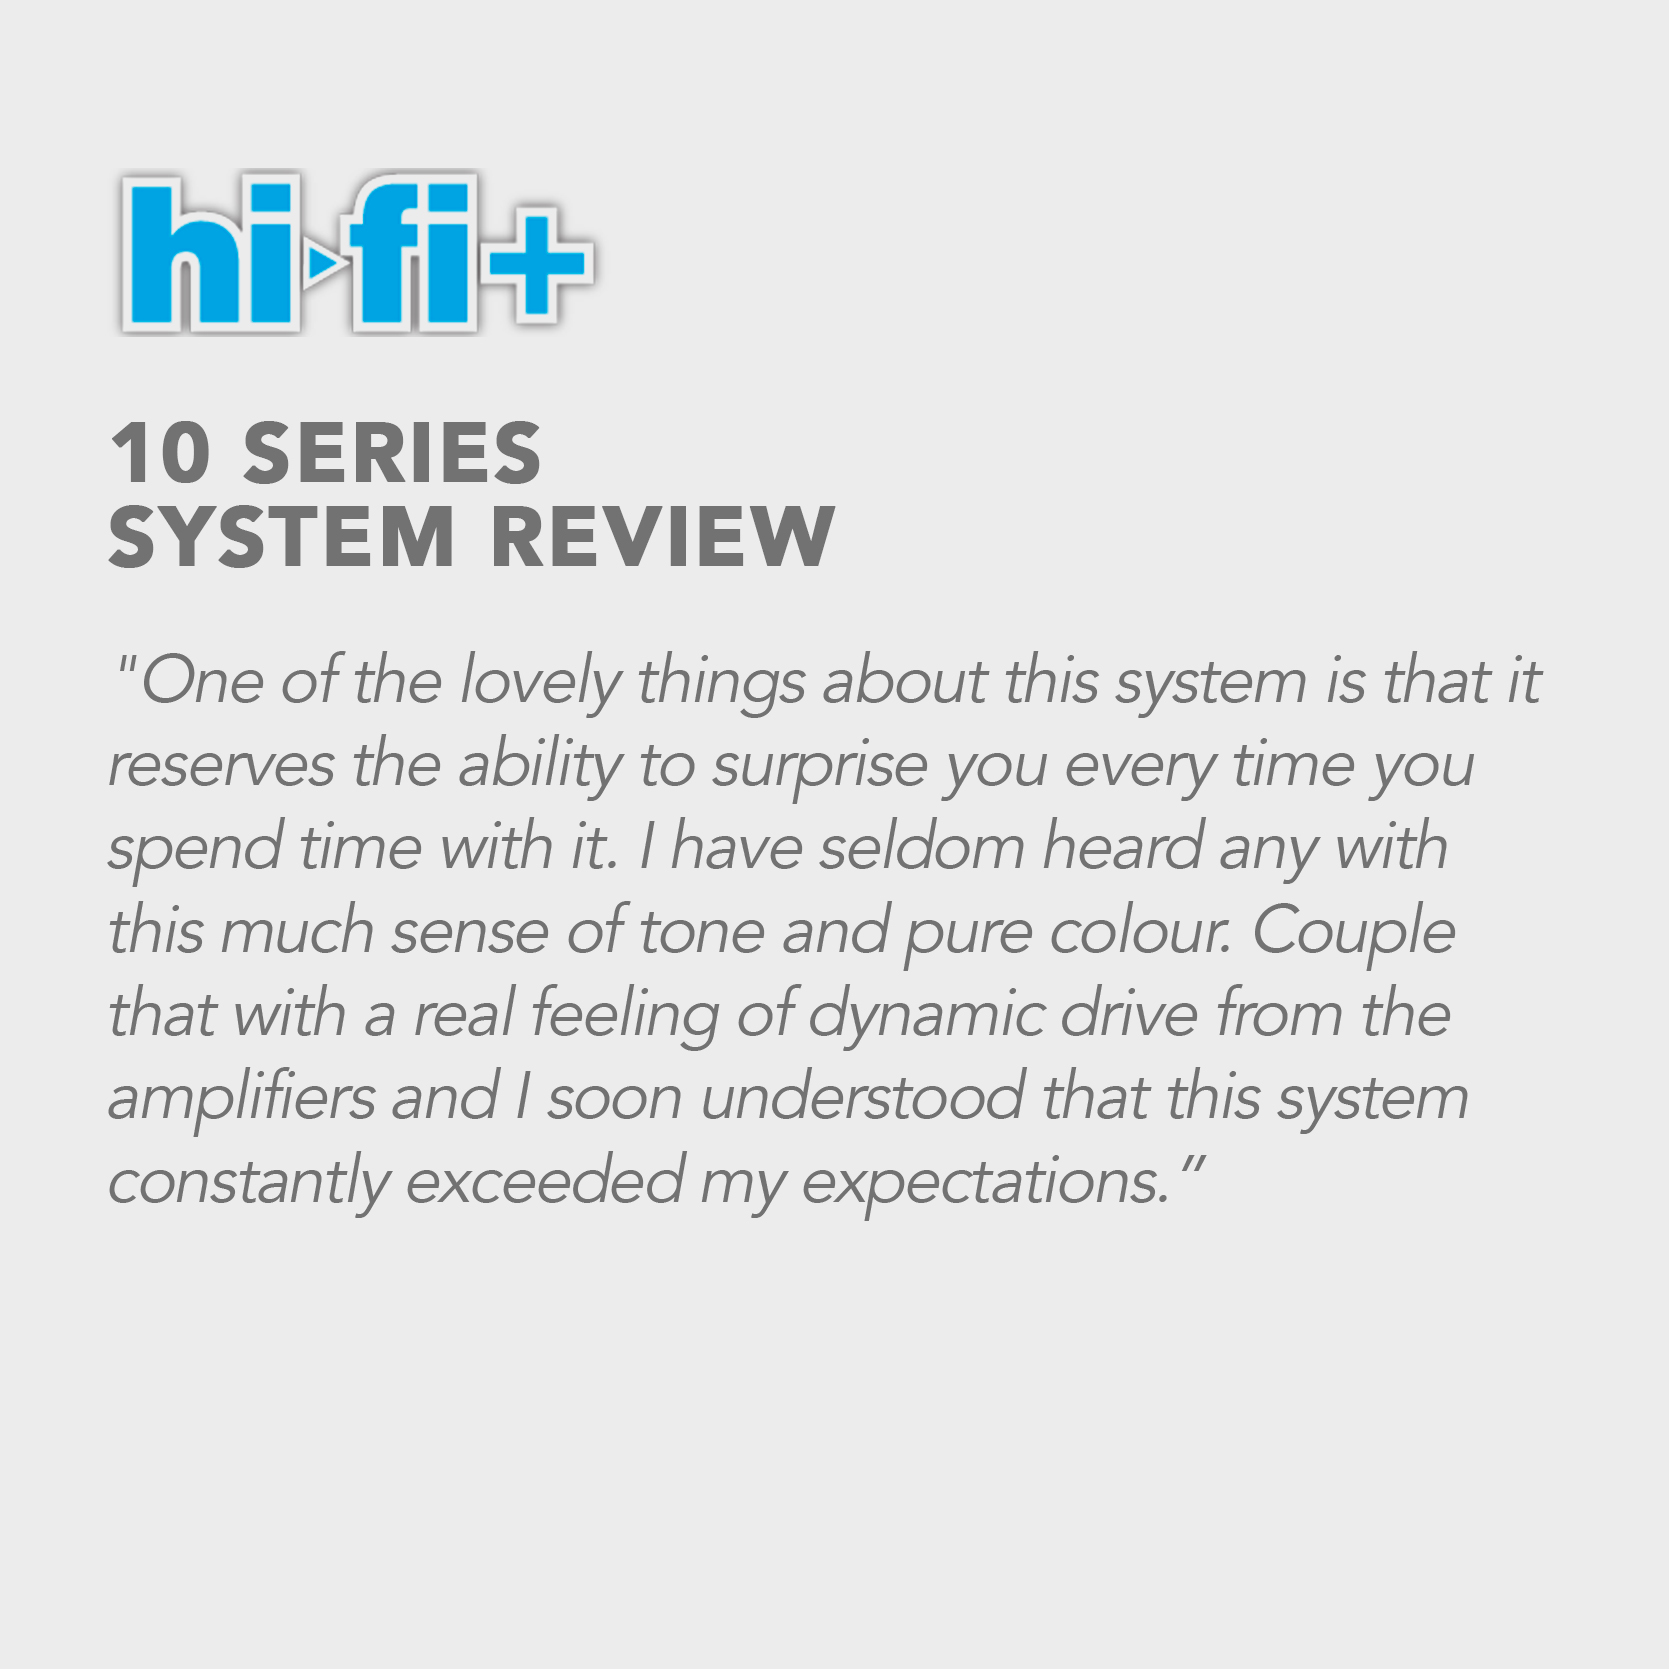 HiFi + | 10 Series System